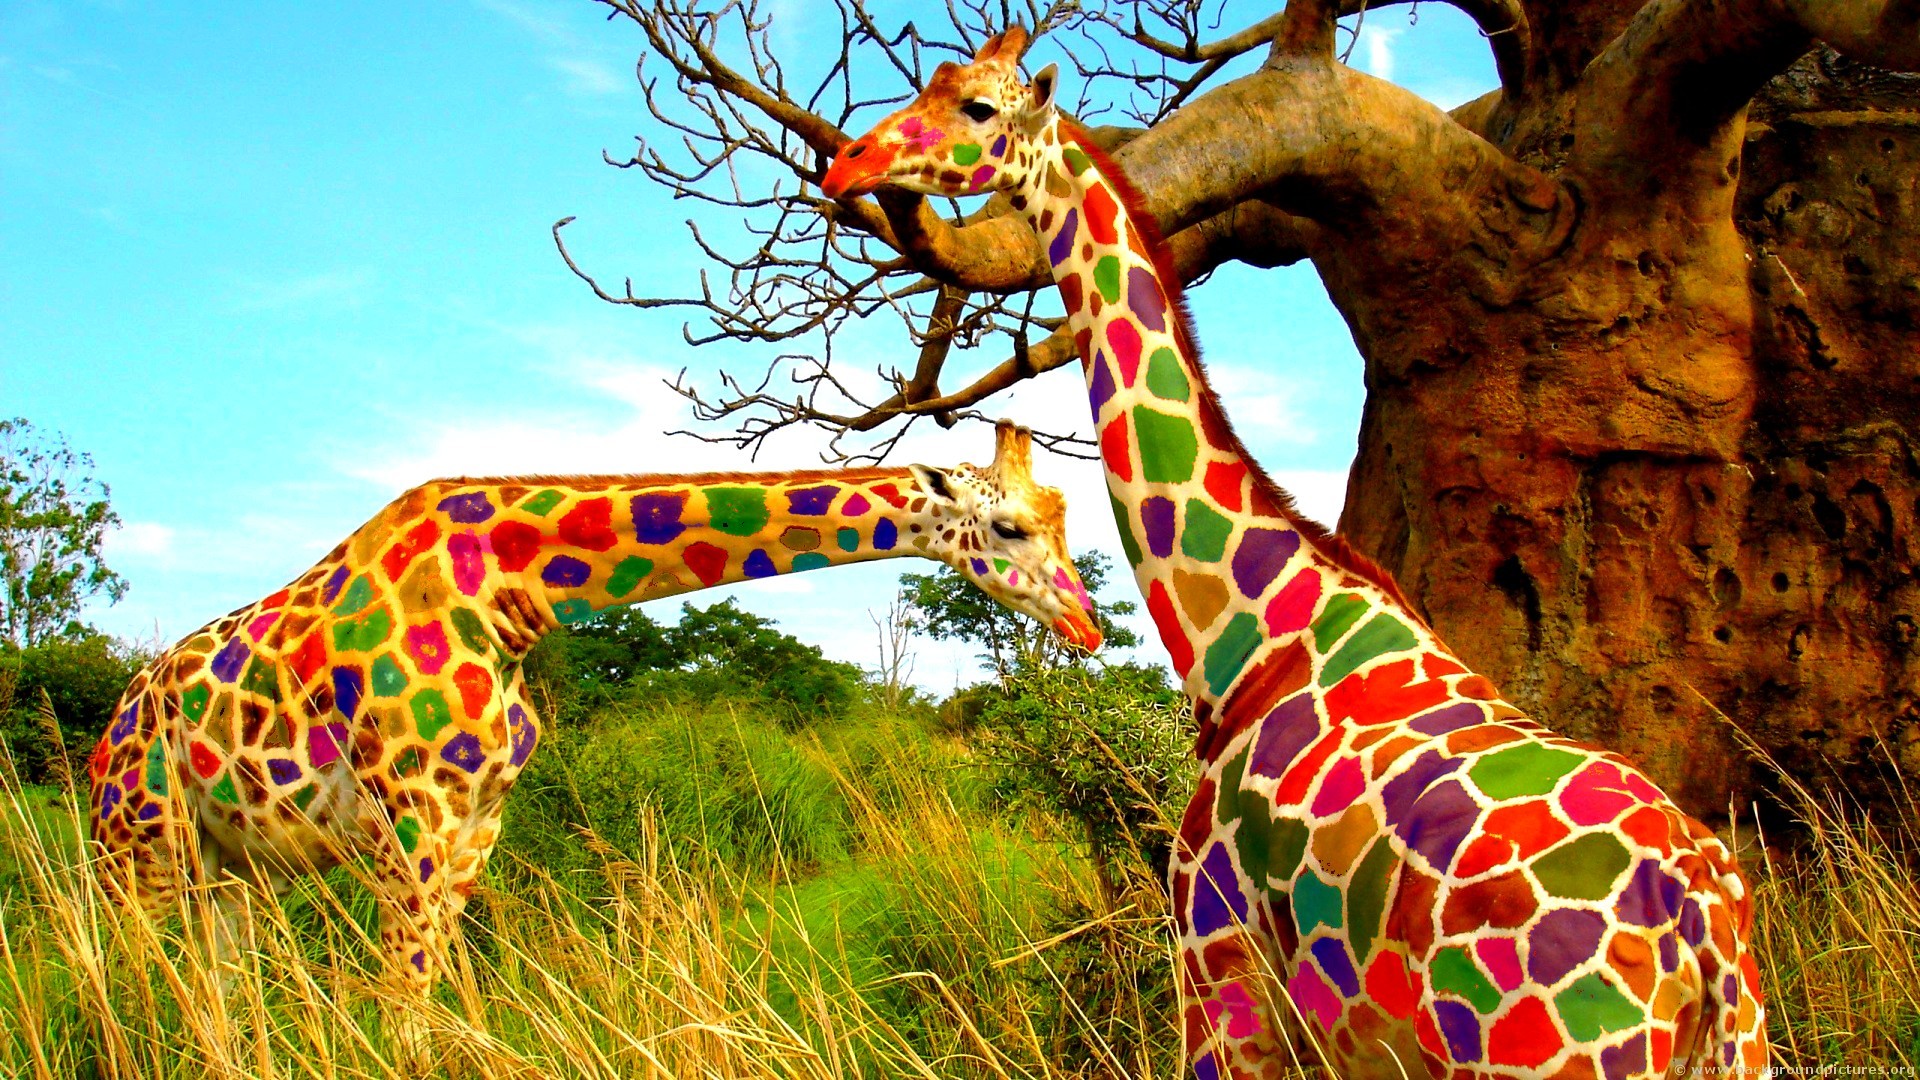 Nature Animals Landscape Giraffes Trees Colorful Grass Humor Photo Manipulation 1920x1080